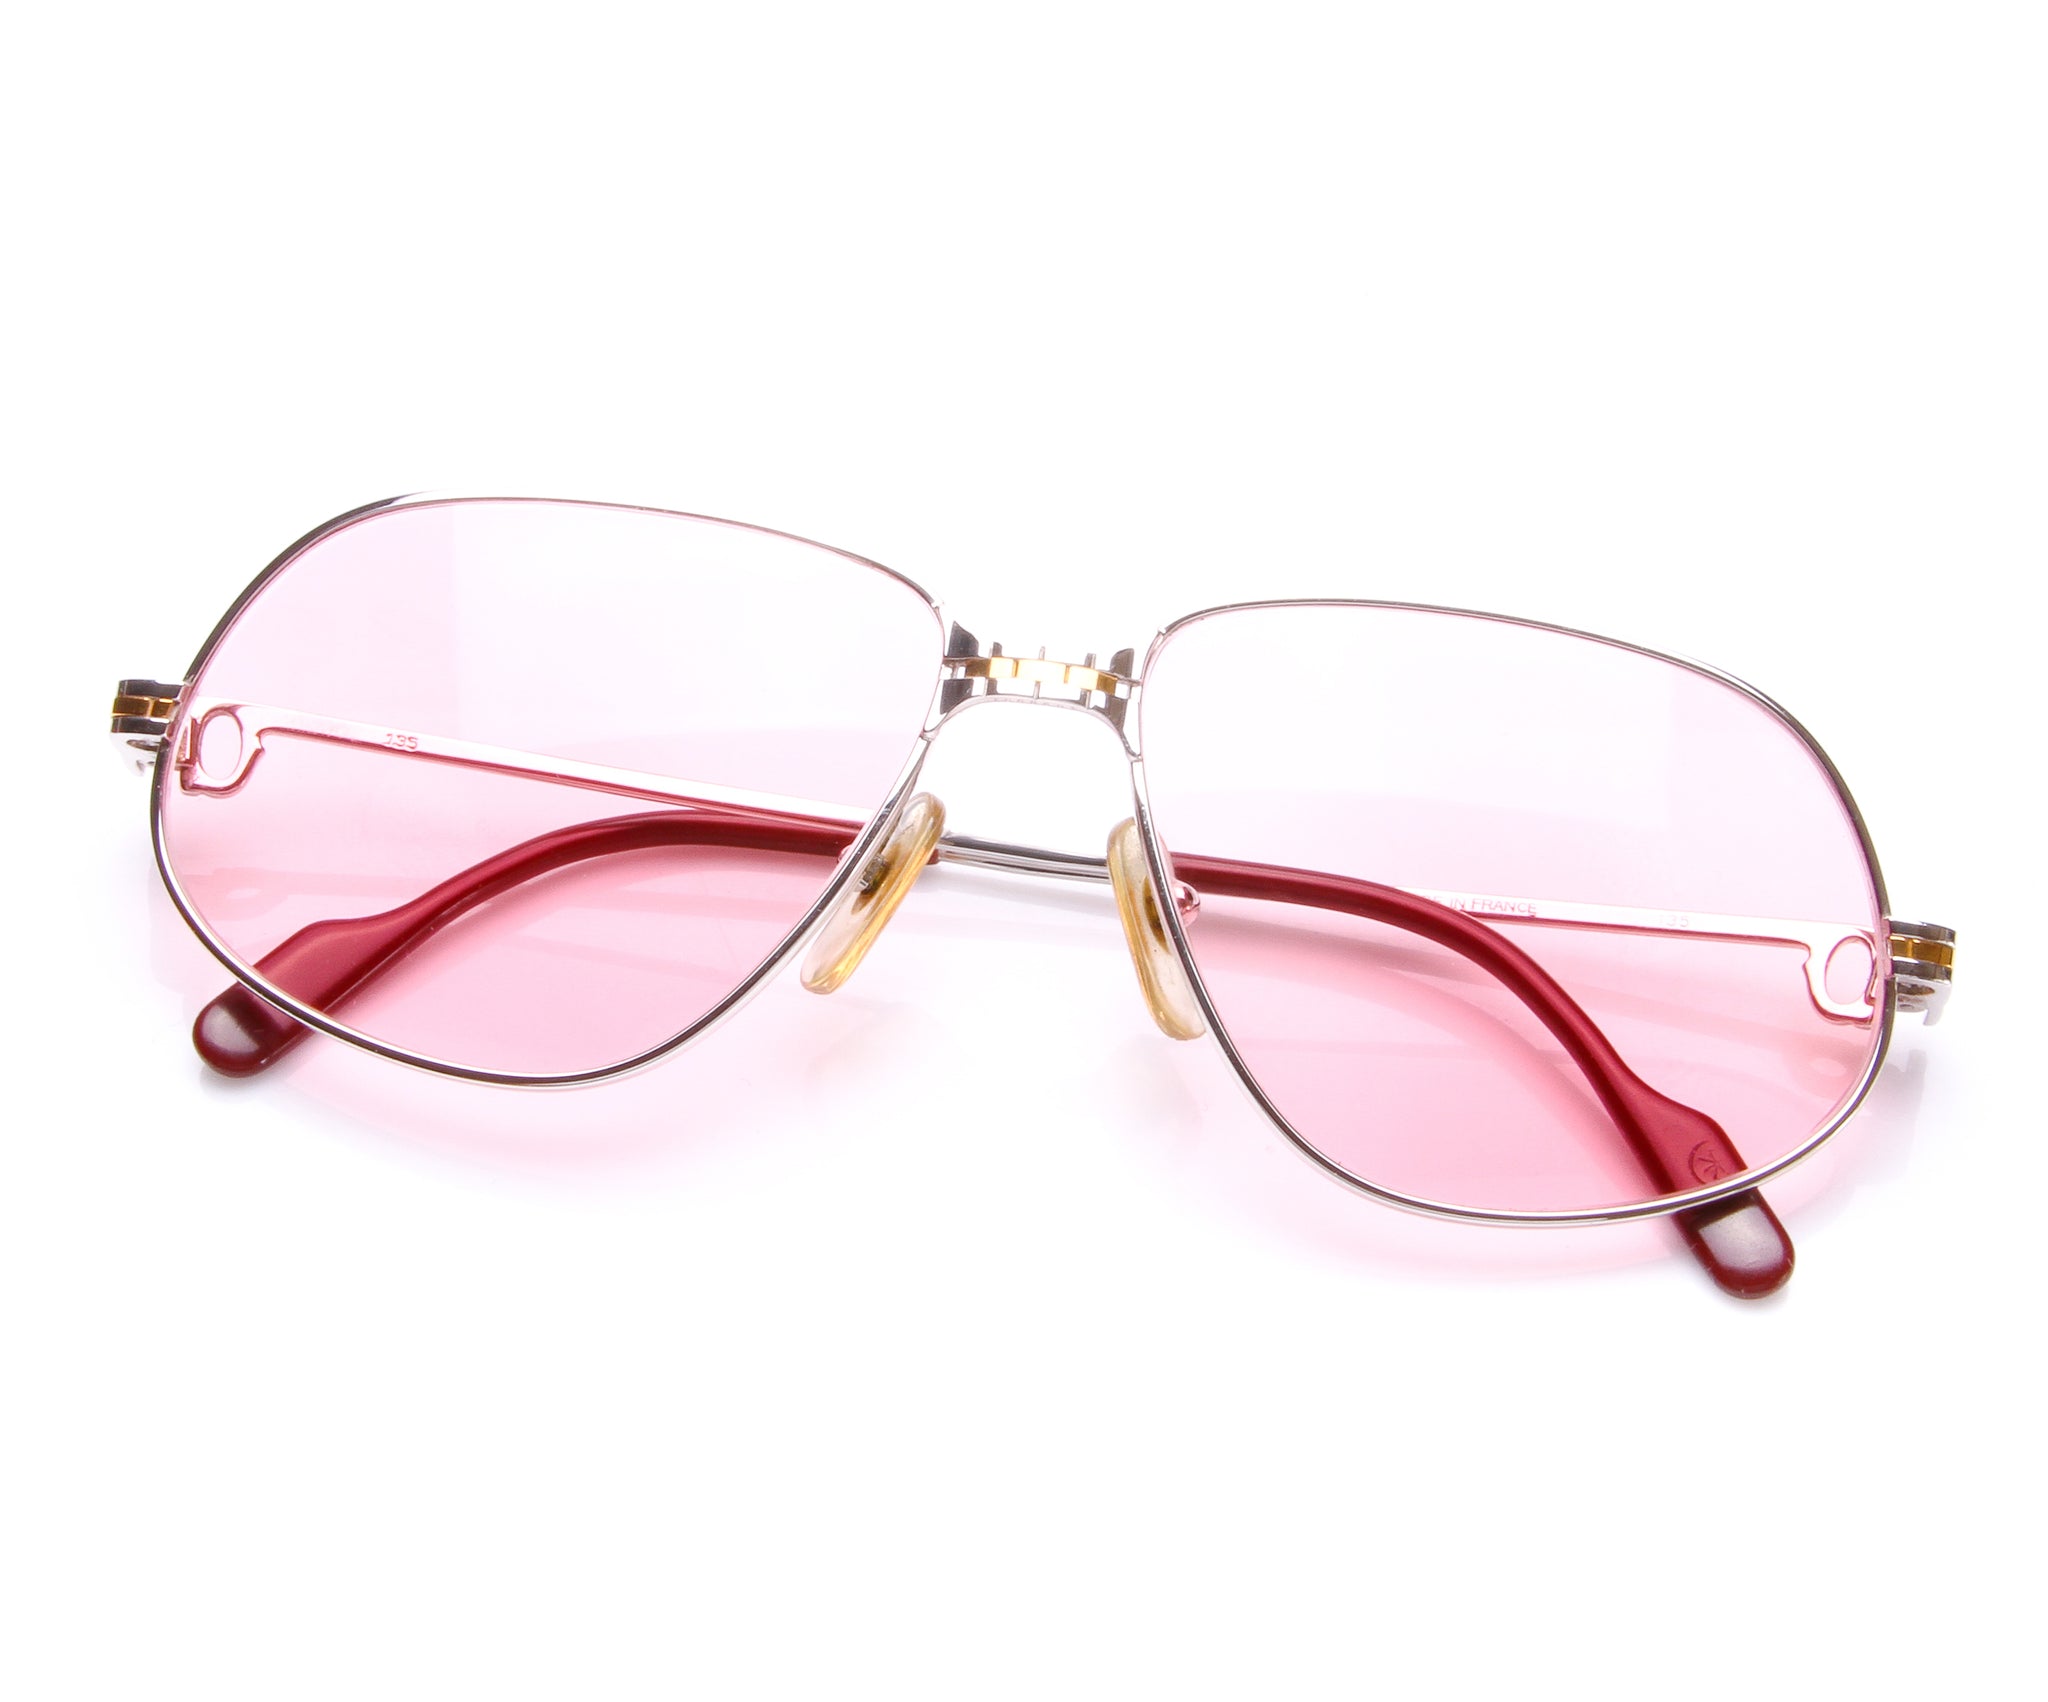 rose gold cartier glasses